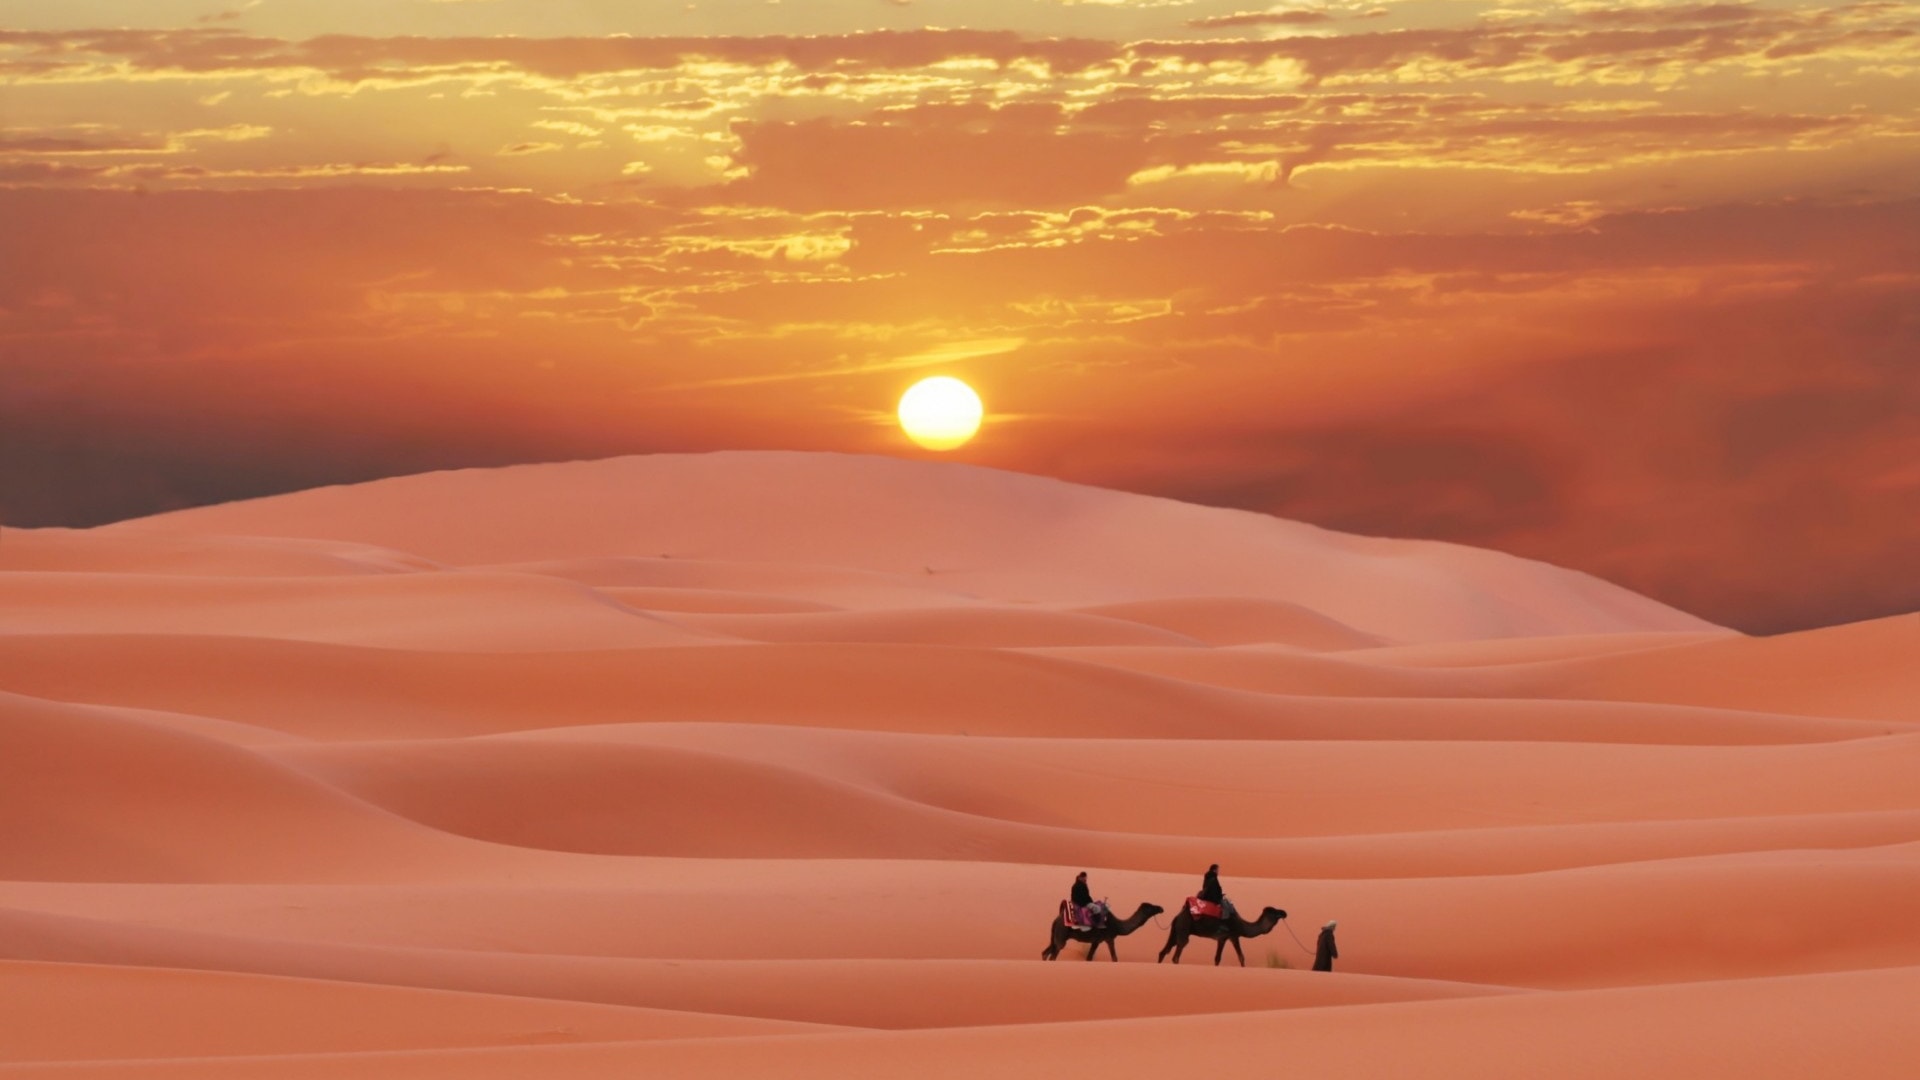 pathfinders treks - mount toubkal 3 day trek- nd-sahara desert combined tour 7 days 6 nights